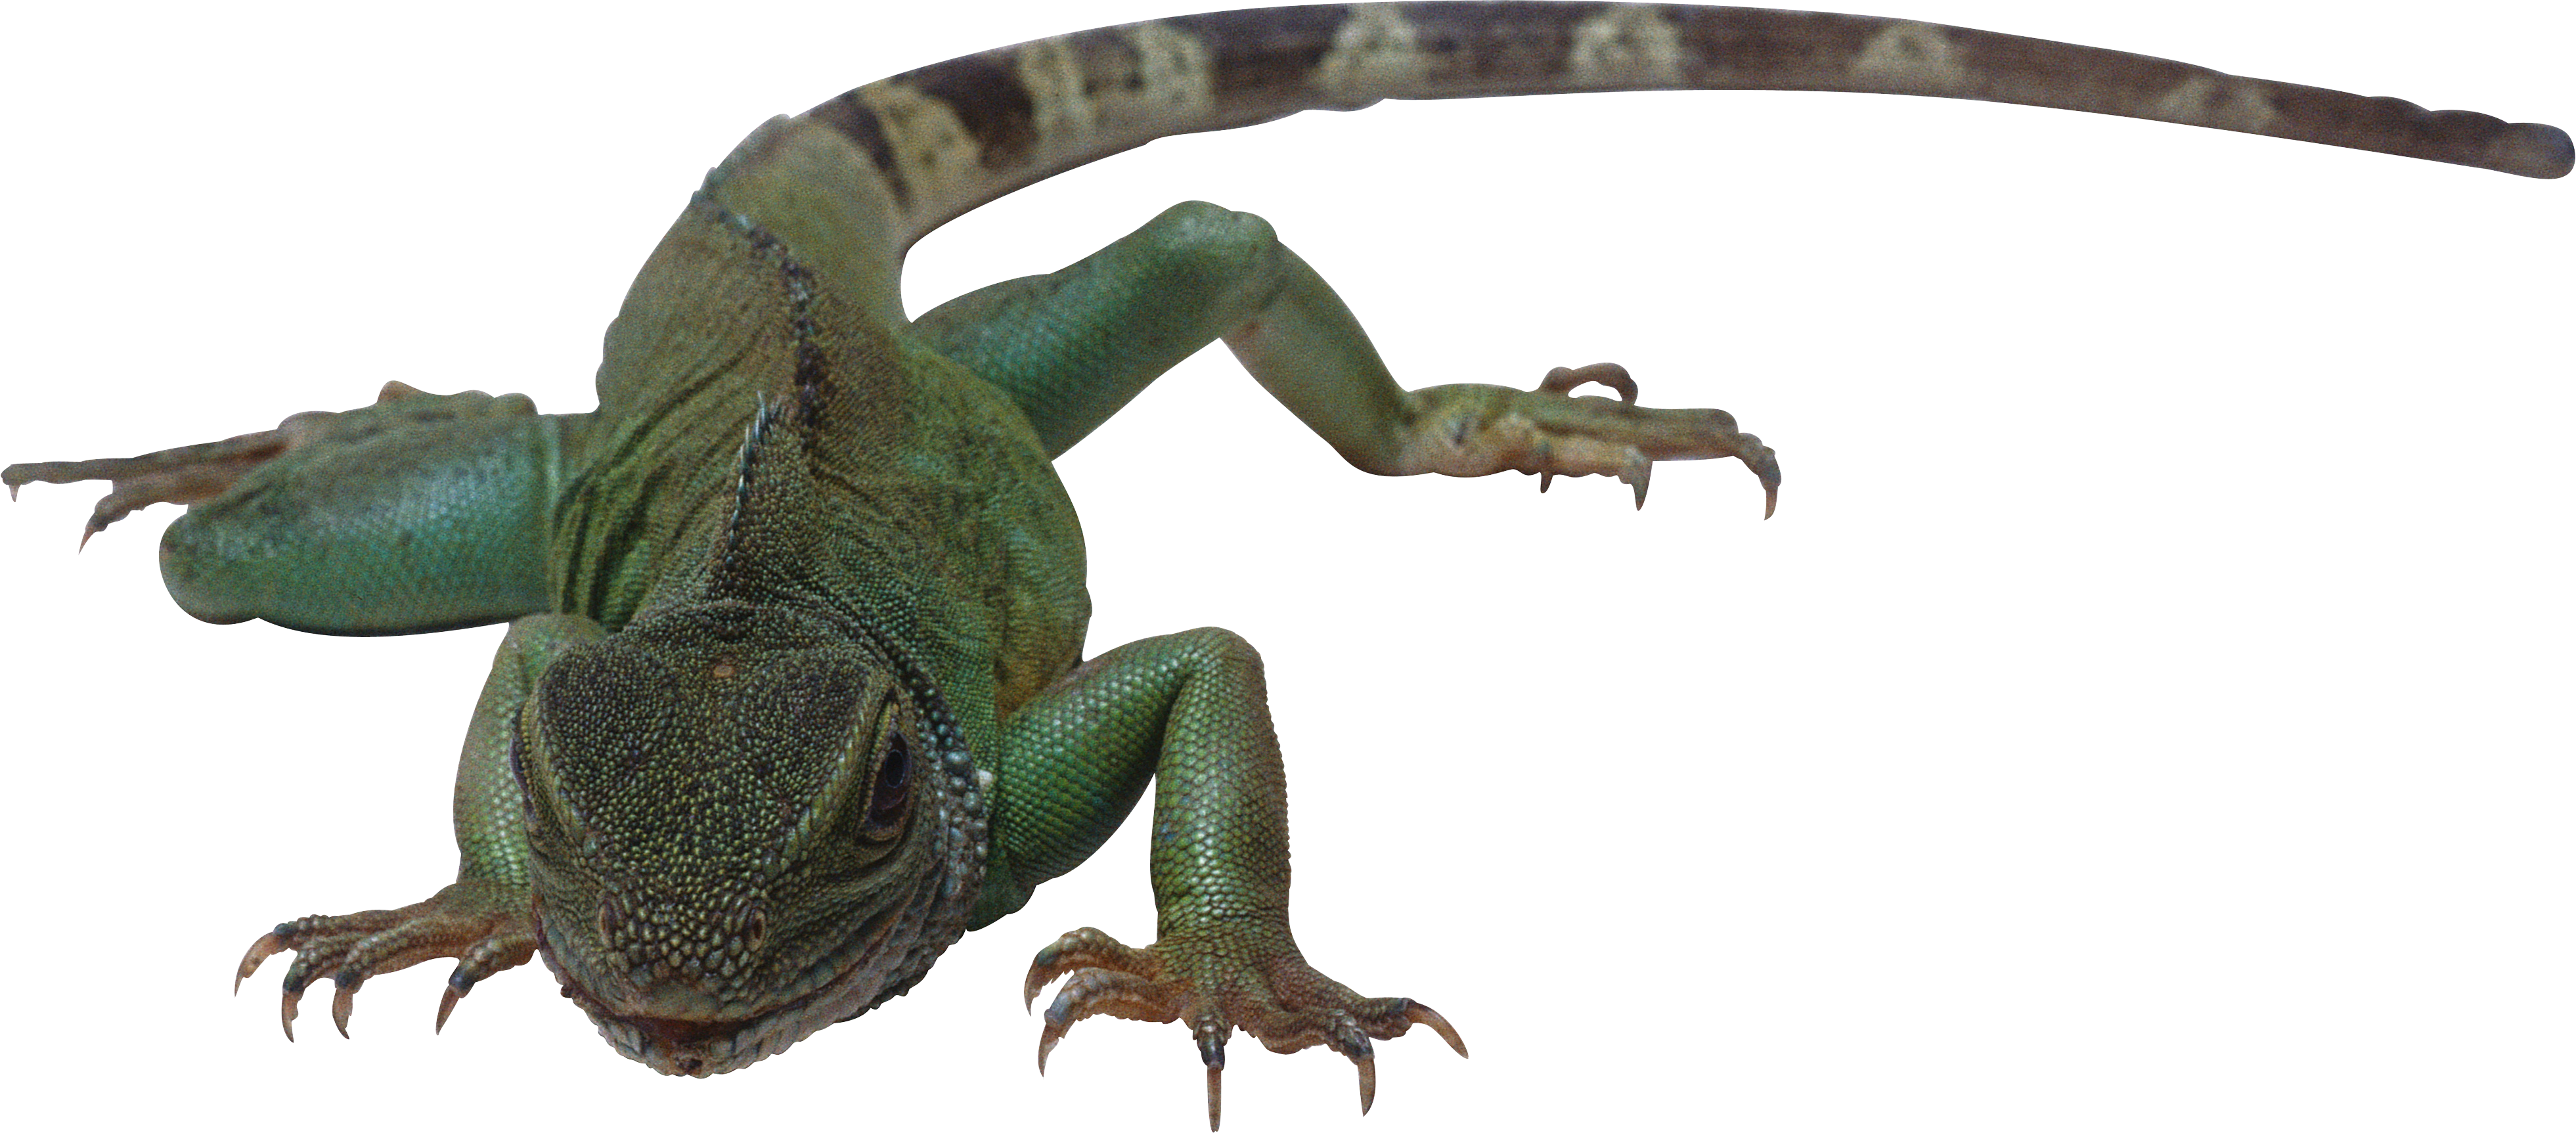 Lizard PNG images Download